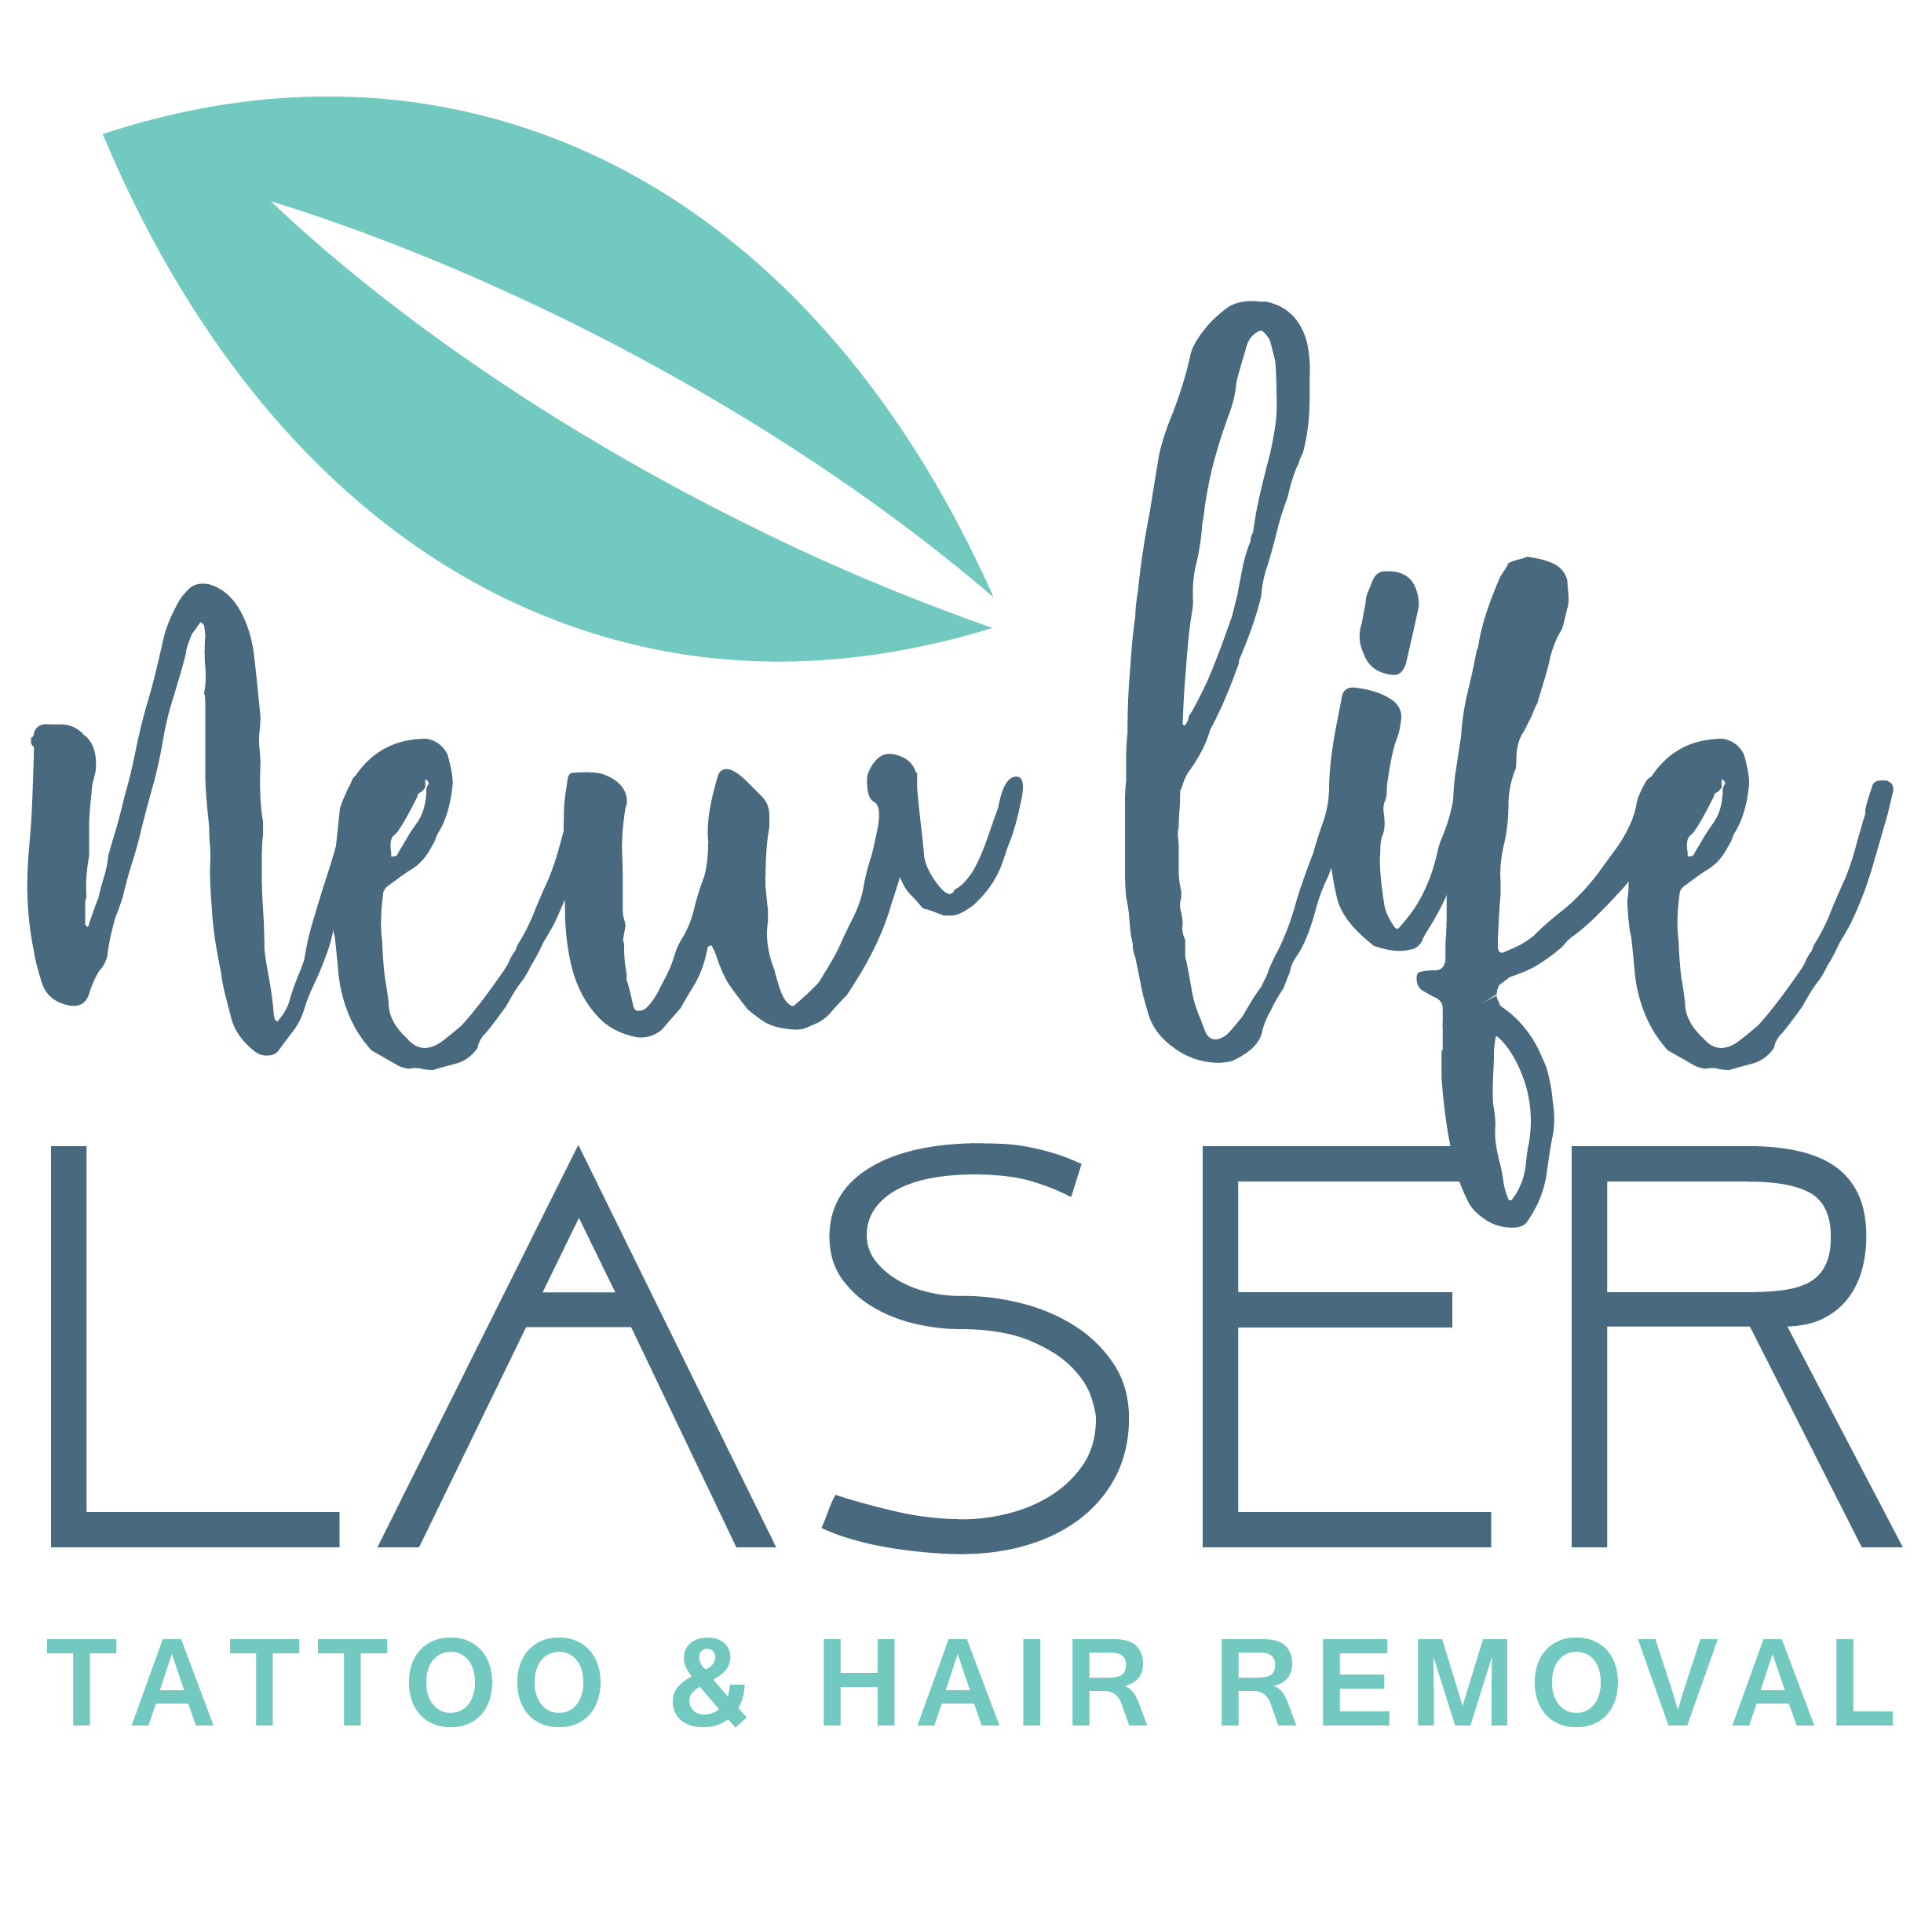 New Life Laser, Nashville Tennessee (TN) - LocalDatabase.com